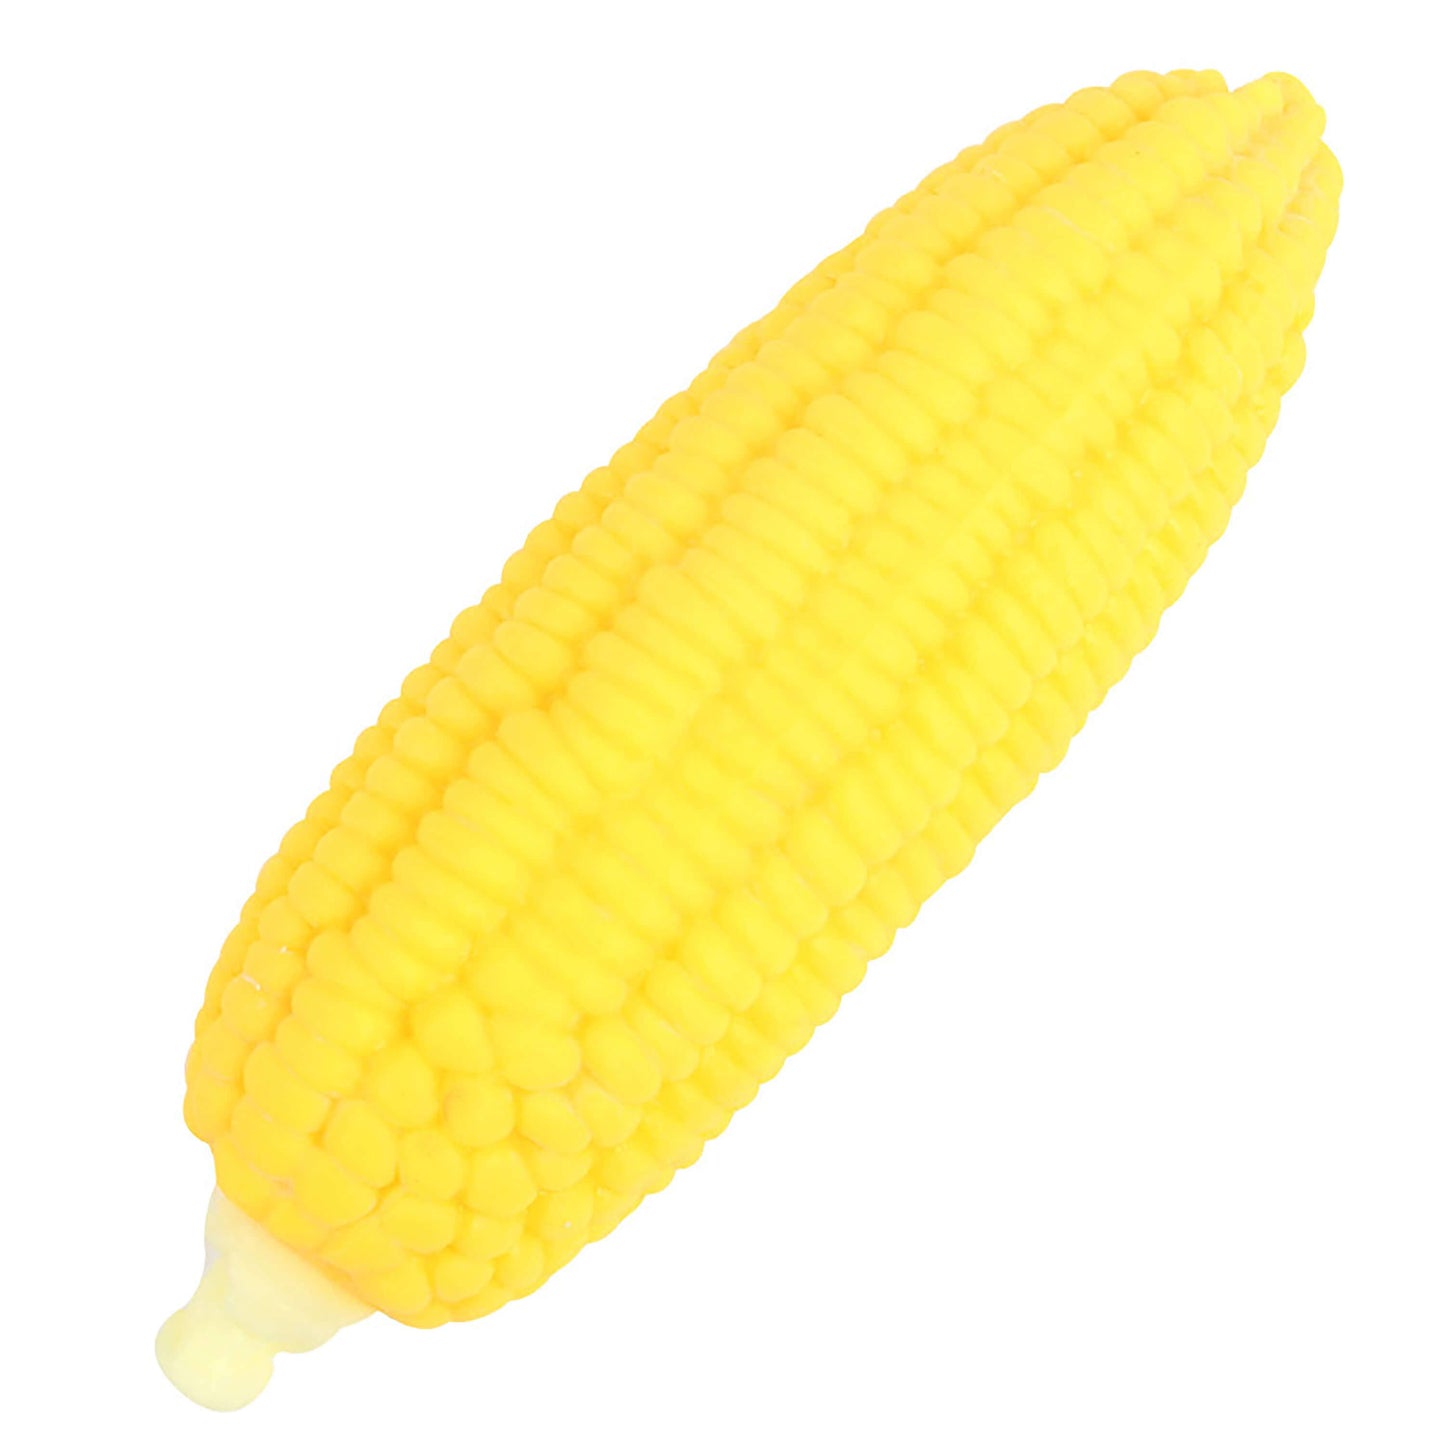 Squishy - Corn on the Cob